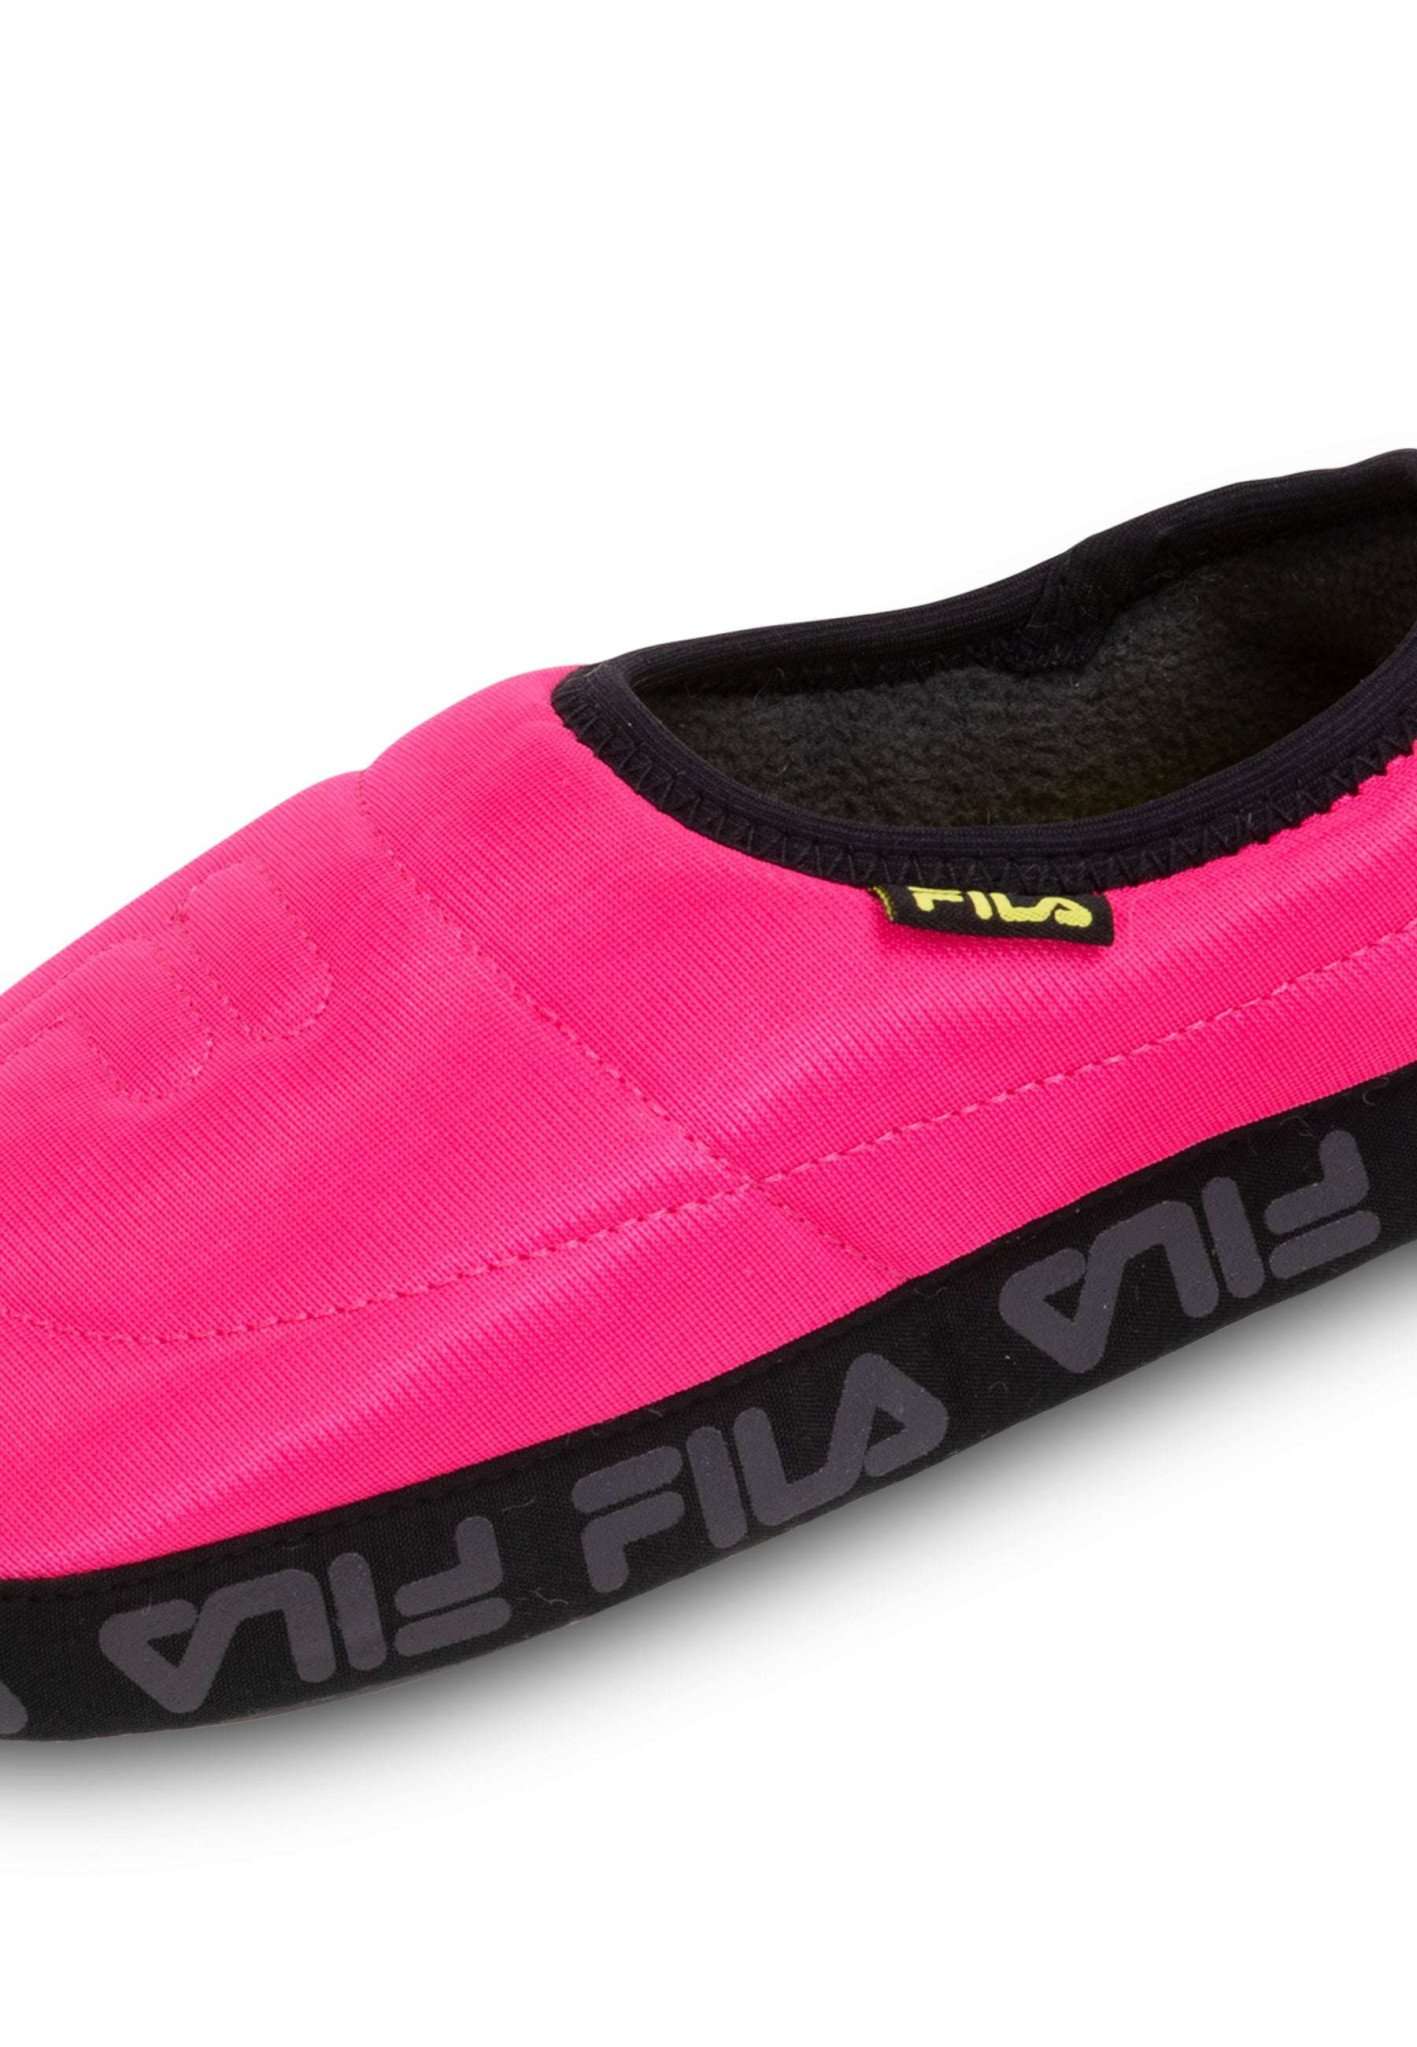 Comfider Wmn in Pink Glo Slippers Fila   